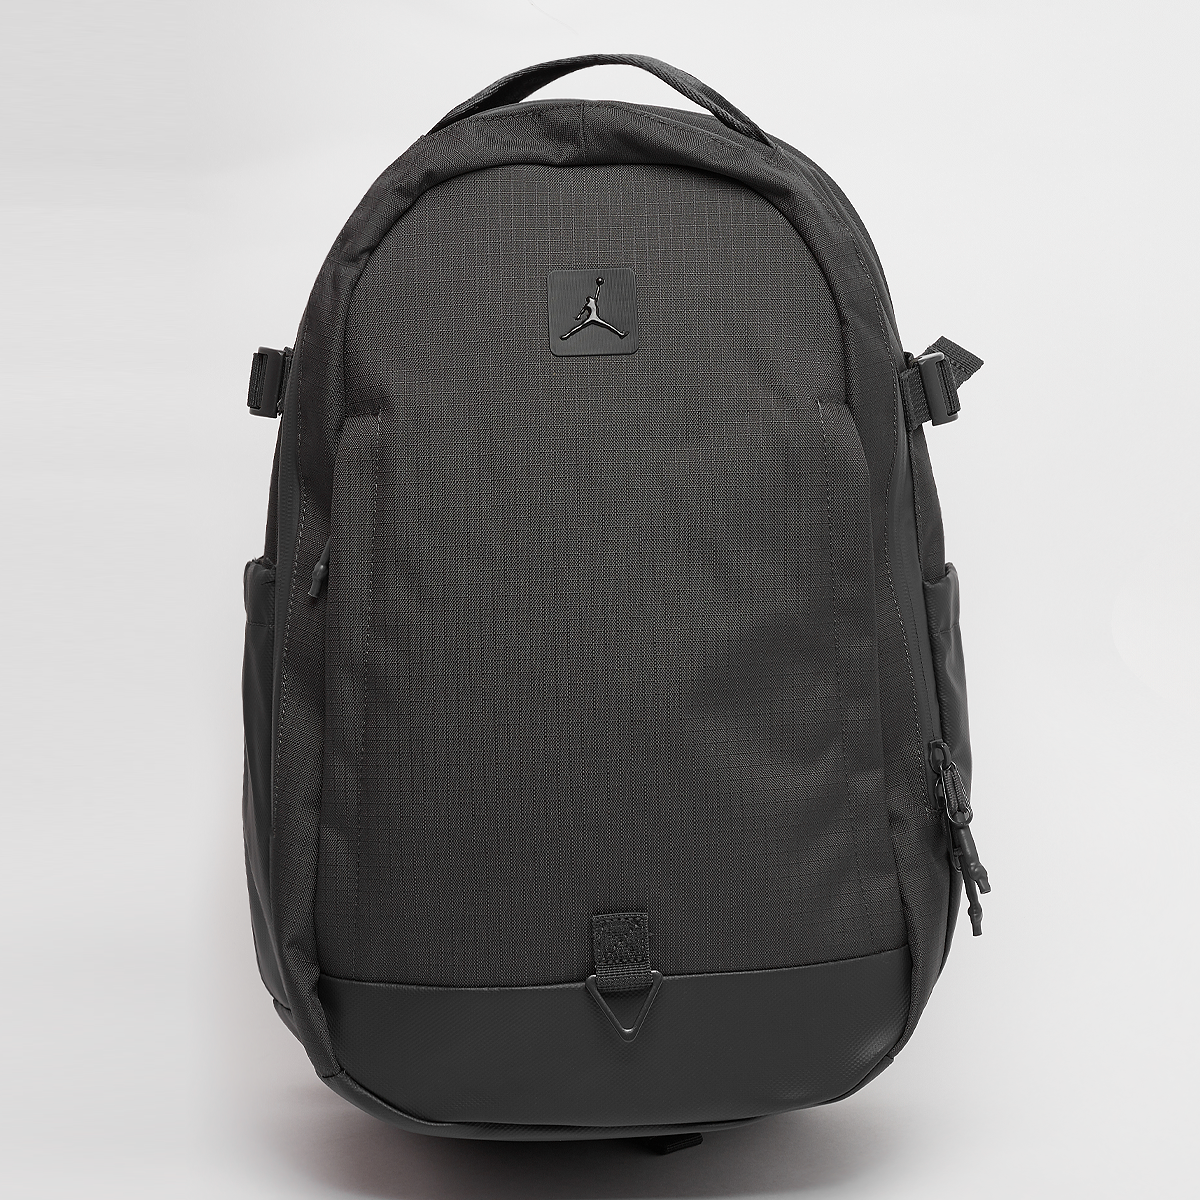 Cordura Franchise Backpack, JORDAN, Bags, smoke grey, taille: one size